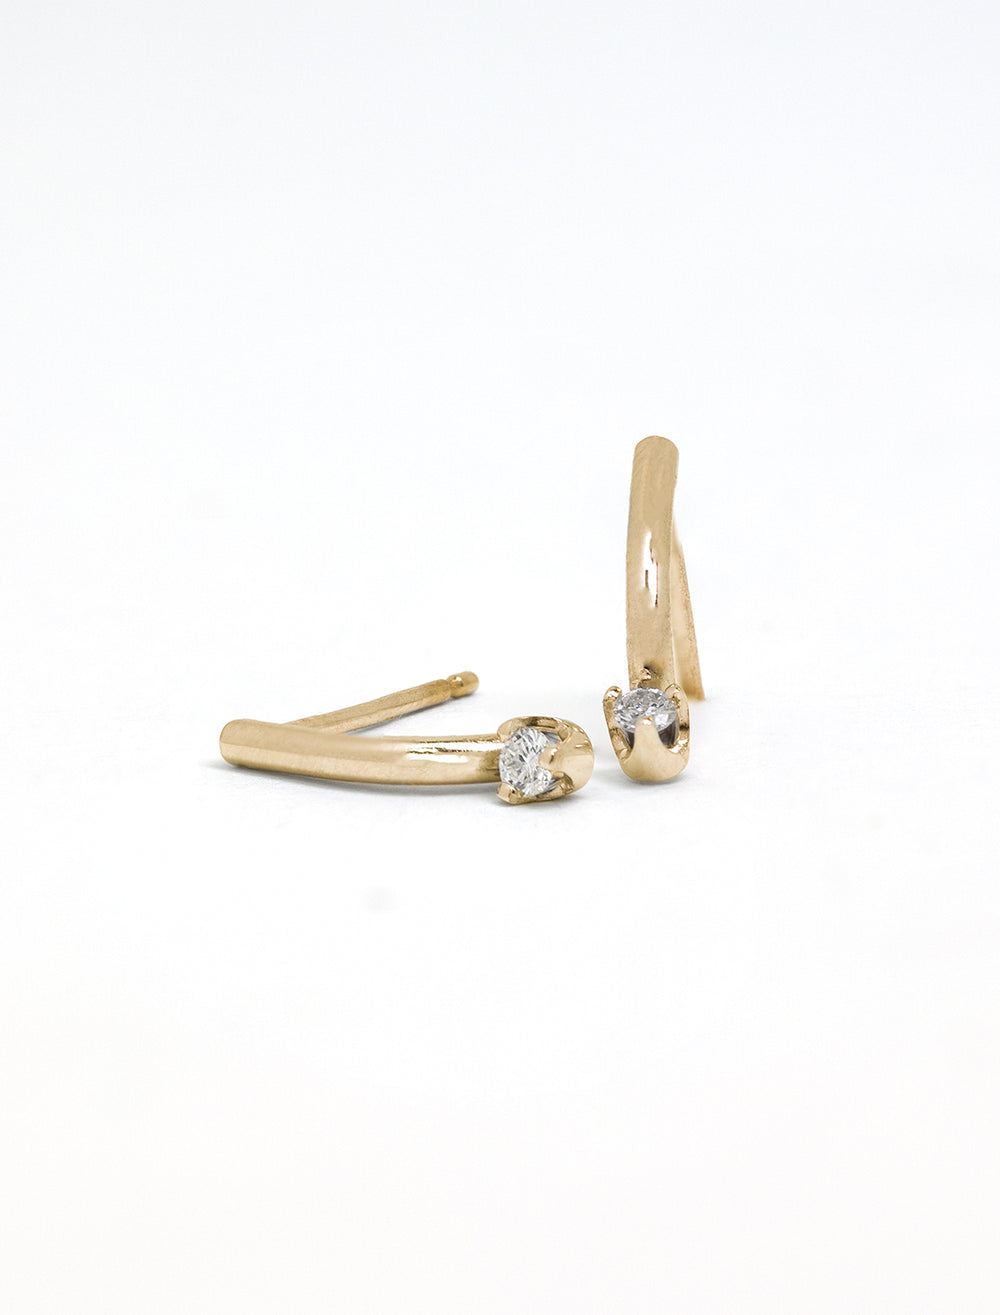 14k curved bar and diamond drop earrings (2)